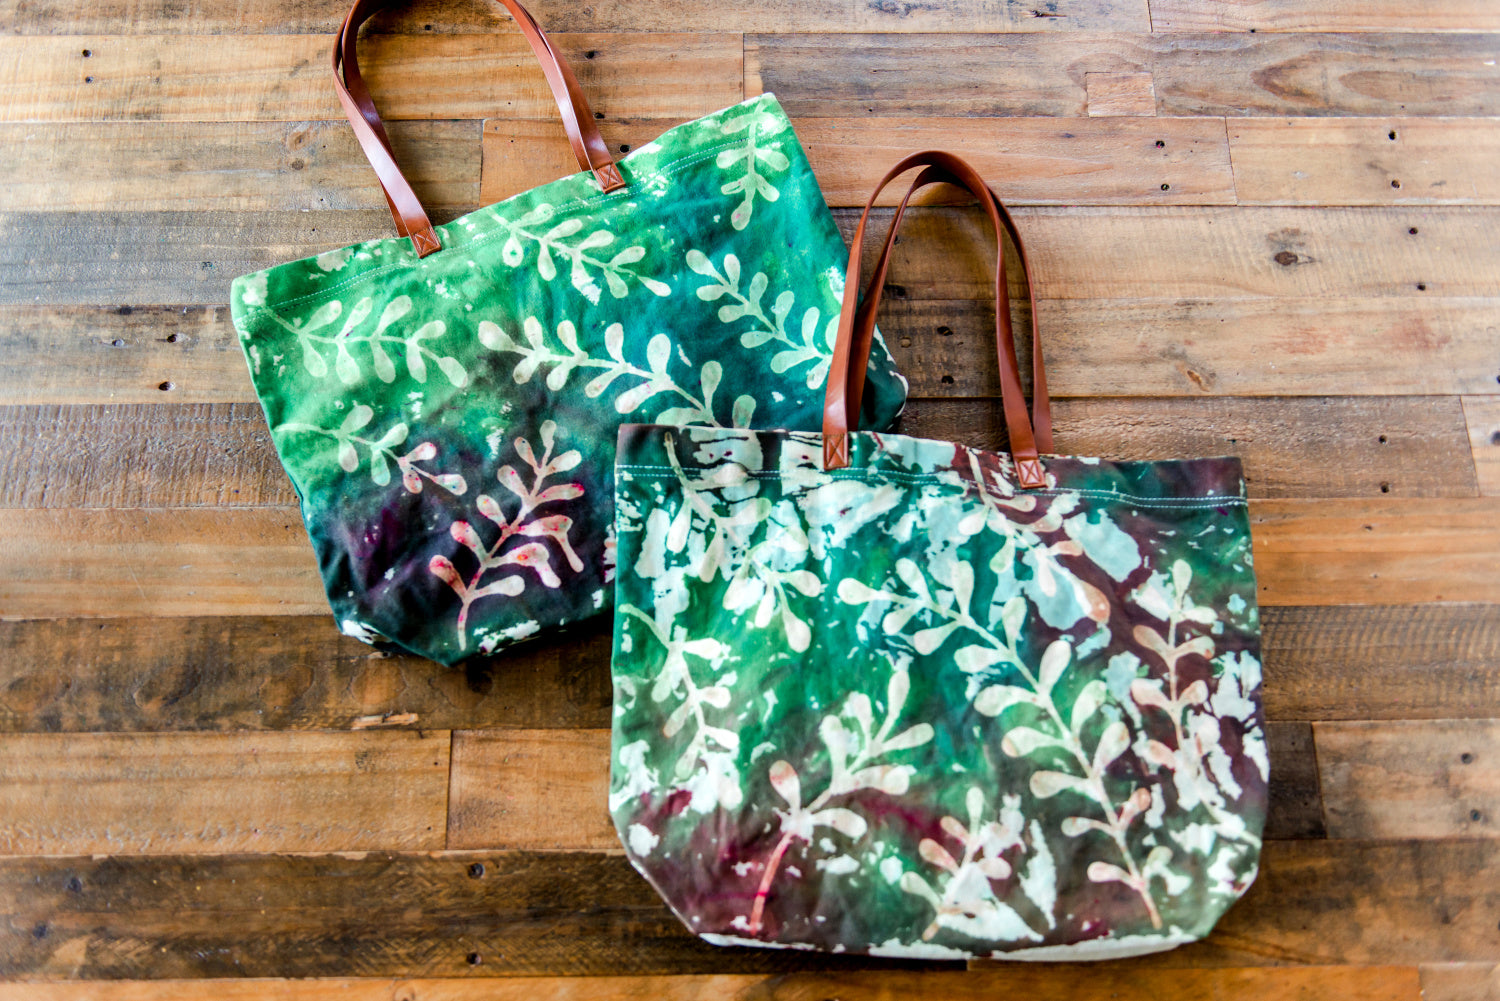 Nature-inspired resist print tie-dye tote bag